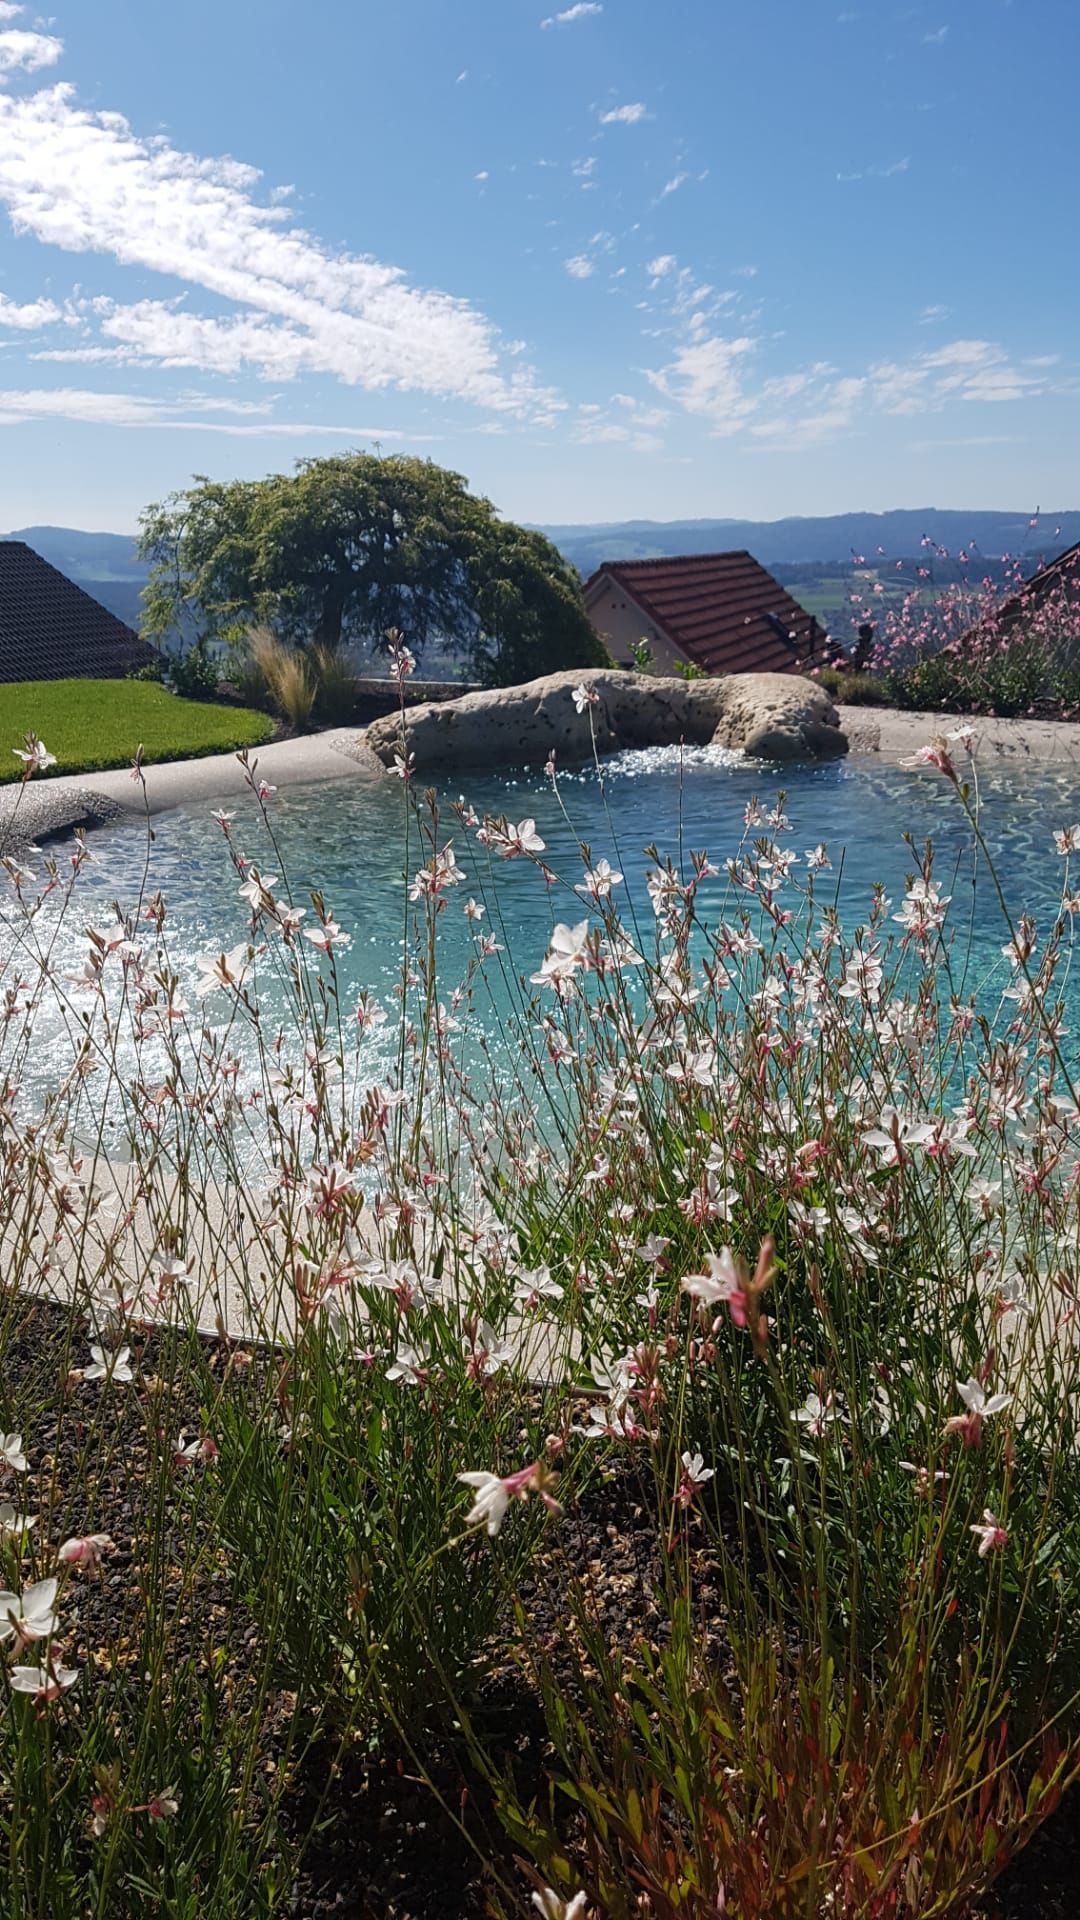 Swiss SPA-Pool